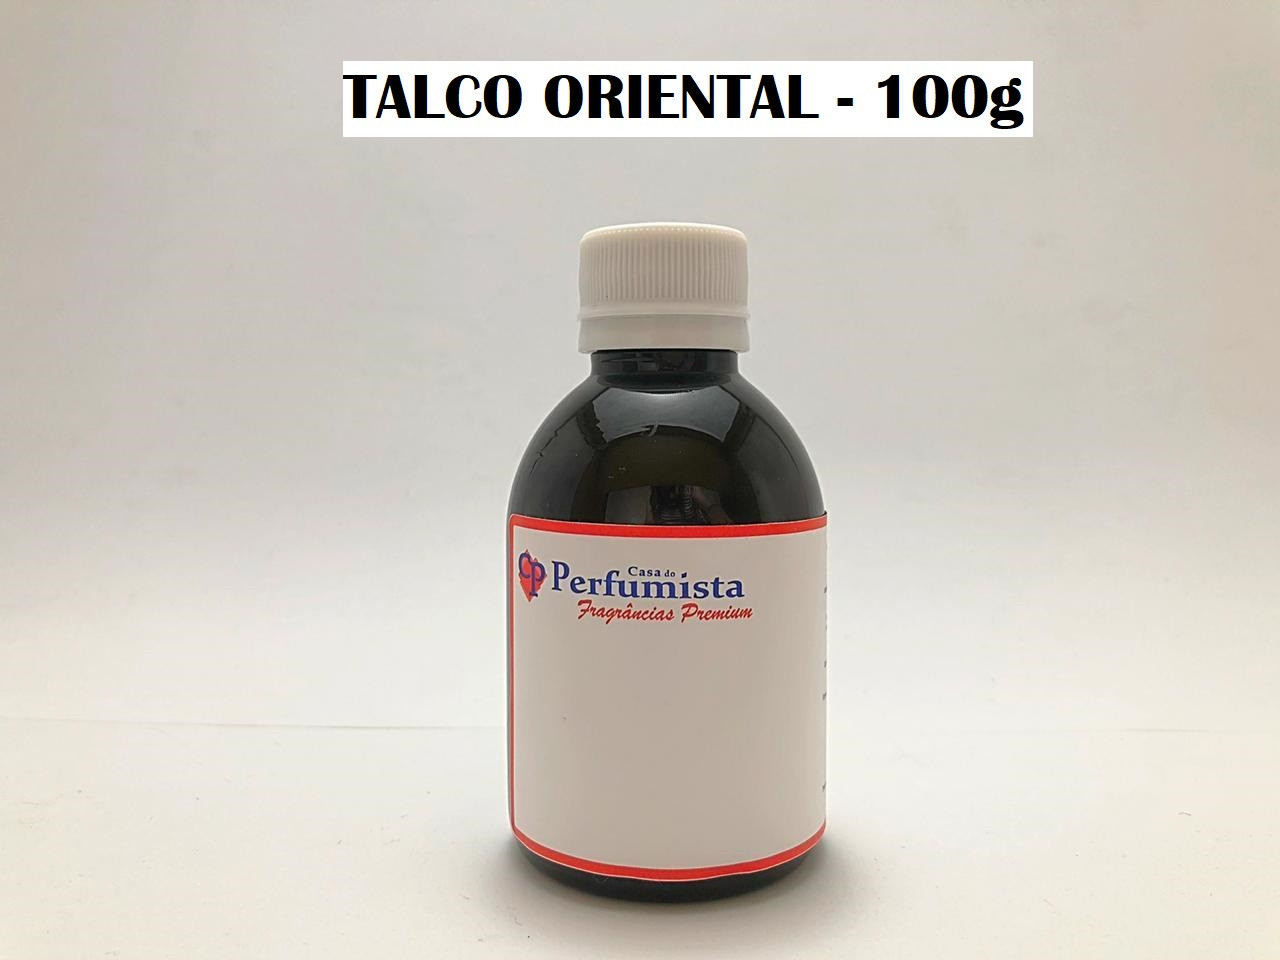 TALCO ORIENTAL - 100g